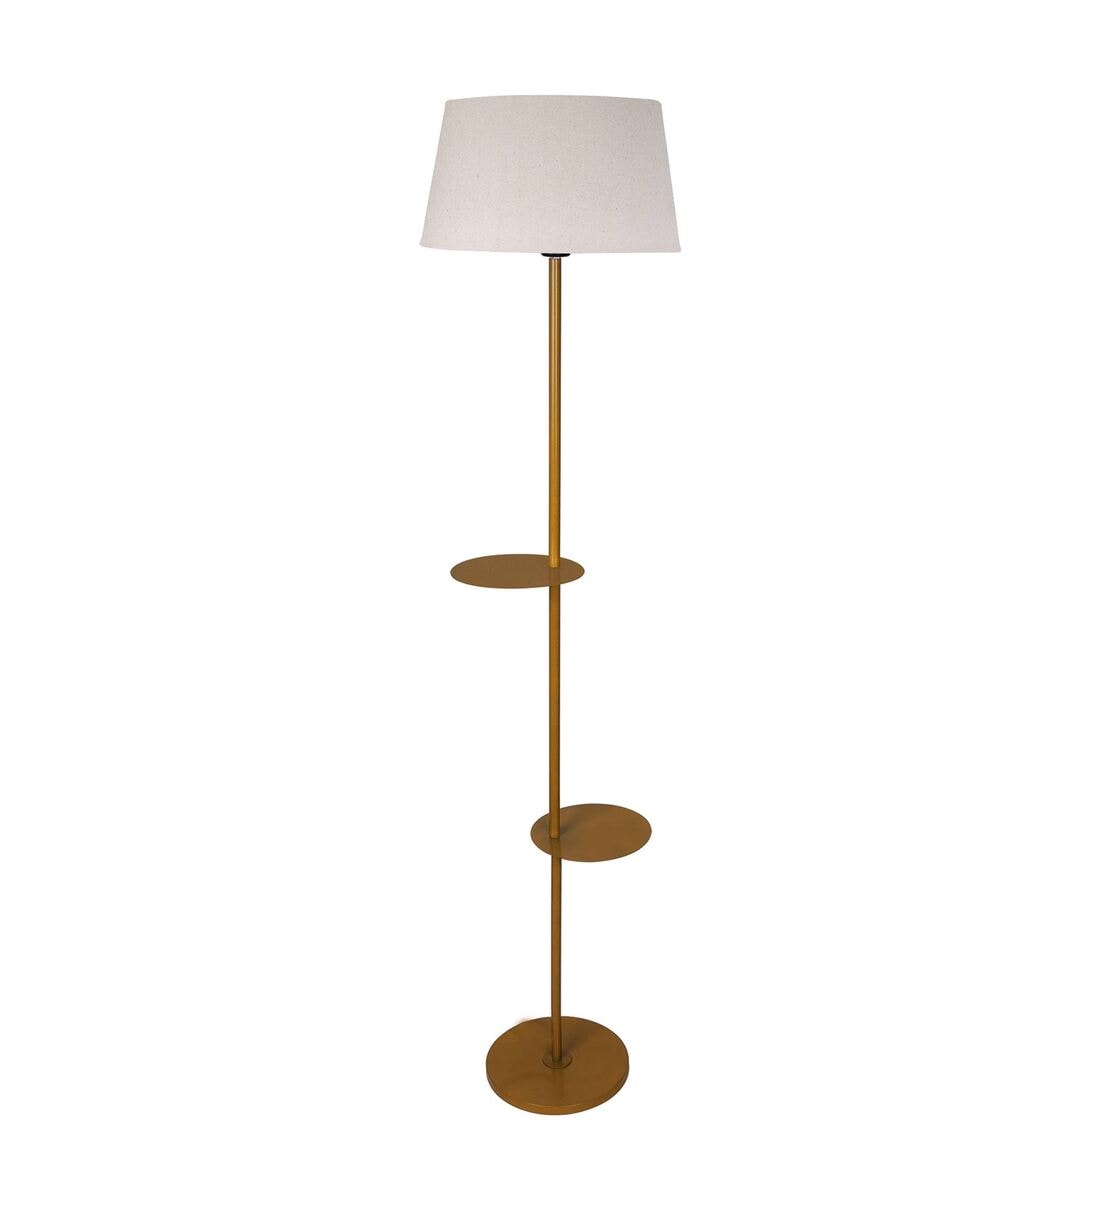 Buy Dorian Khaki Cotton Shade Shelf Floor Lamp With Metal Base By Homesake  at 62% OFF by Homesake Pepperfry